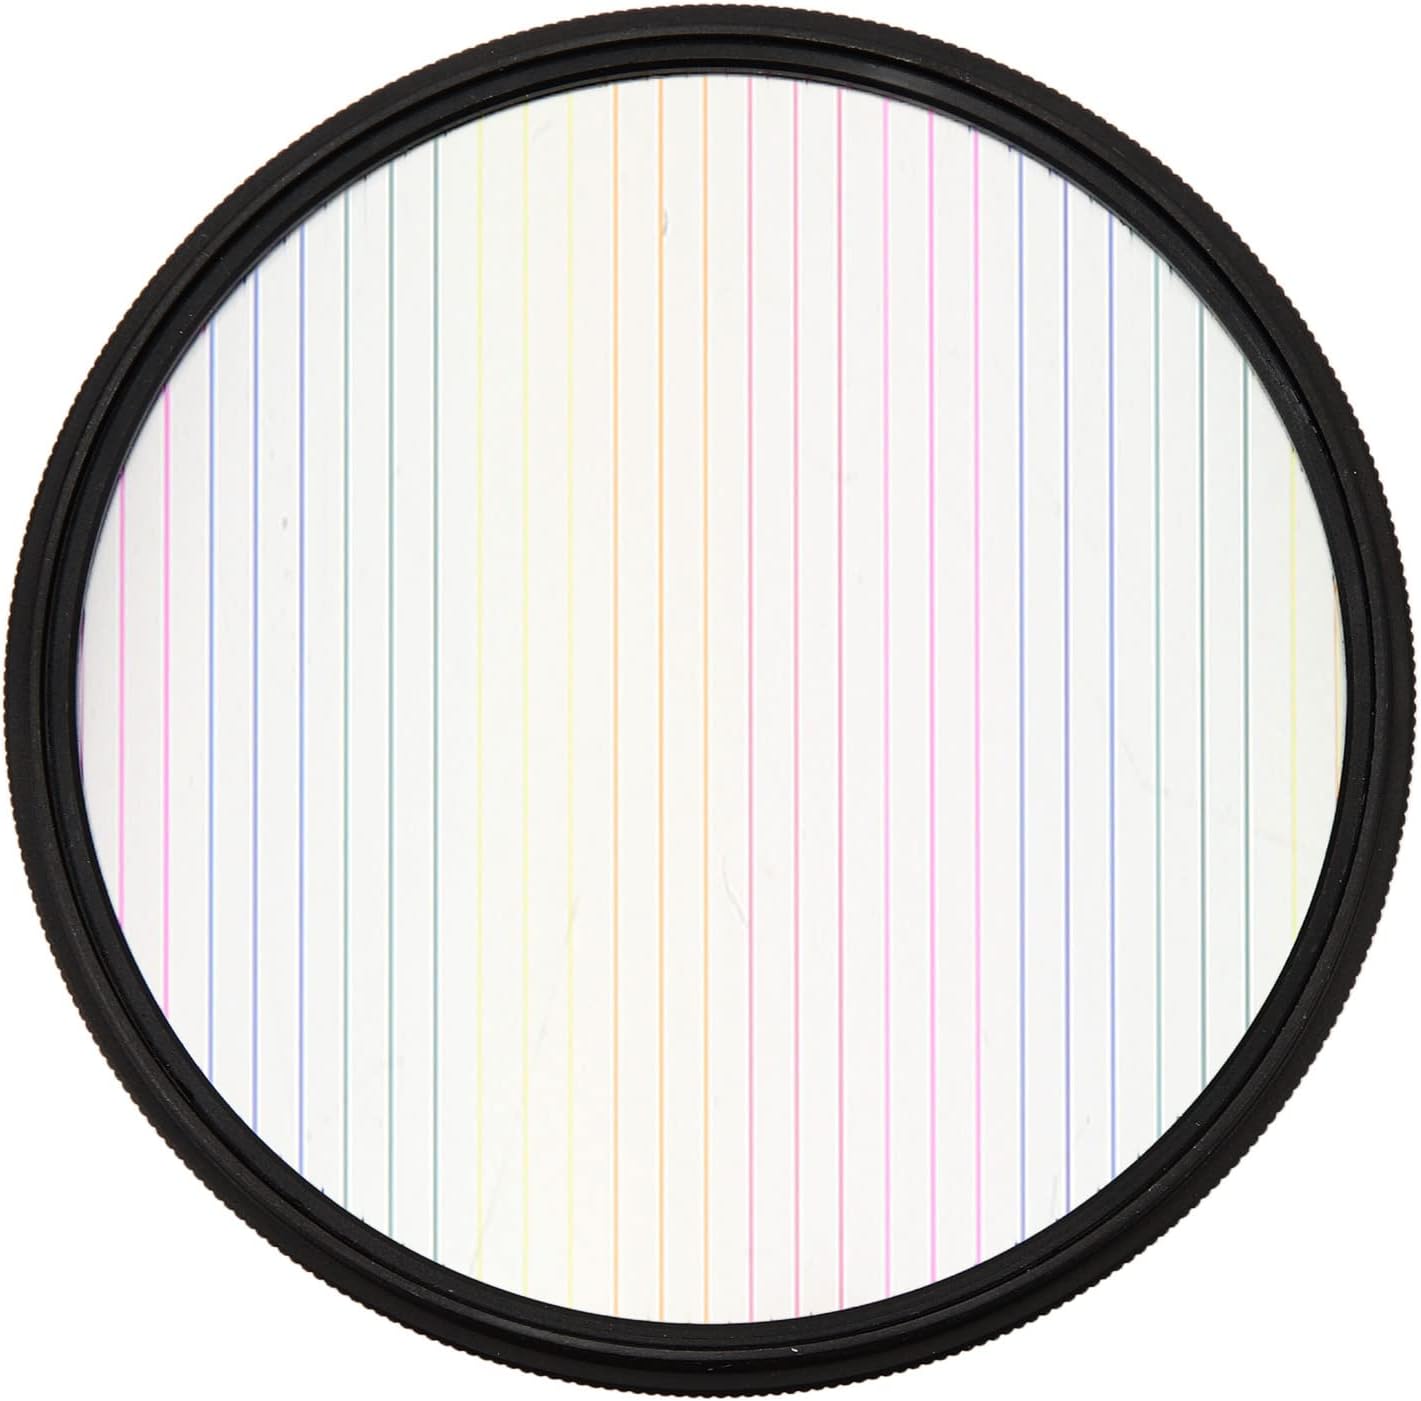 Adding Rainbows with Rainbow Spectrum Filters